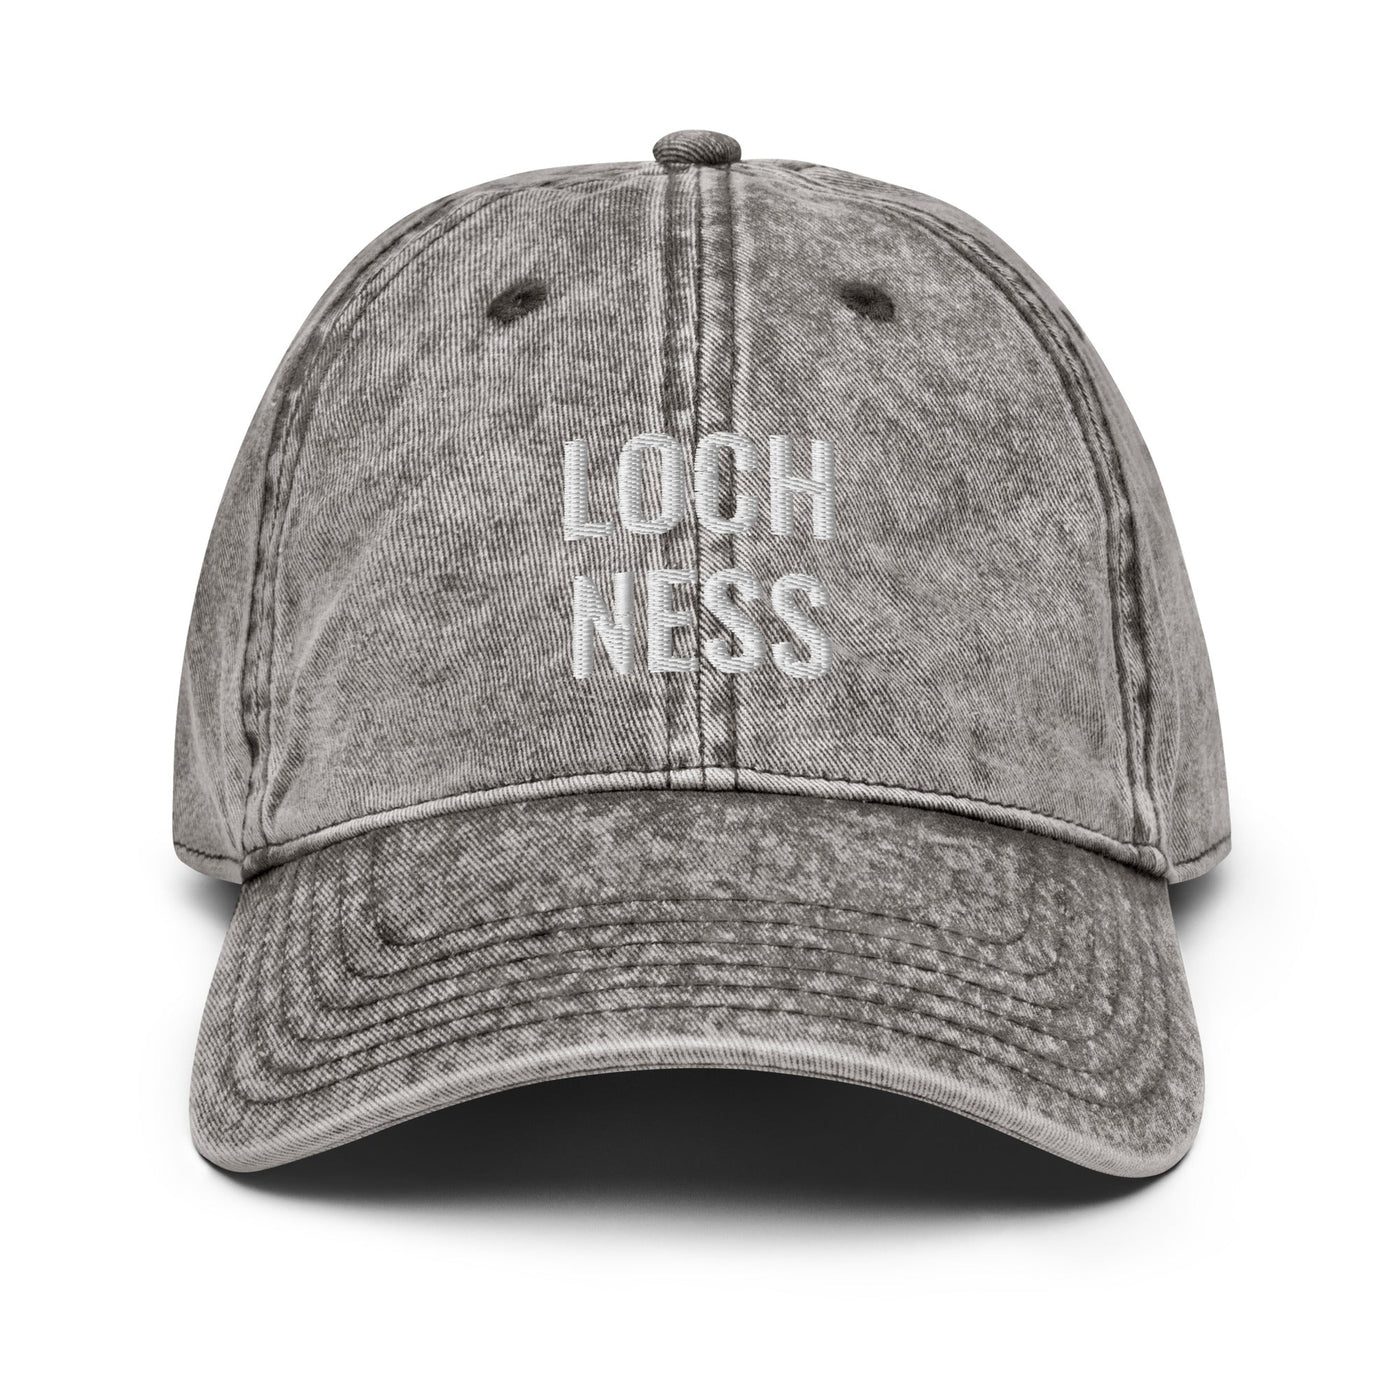 Loch Ness Hat - Ezra's Clothing